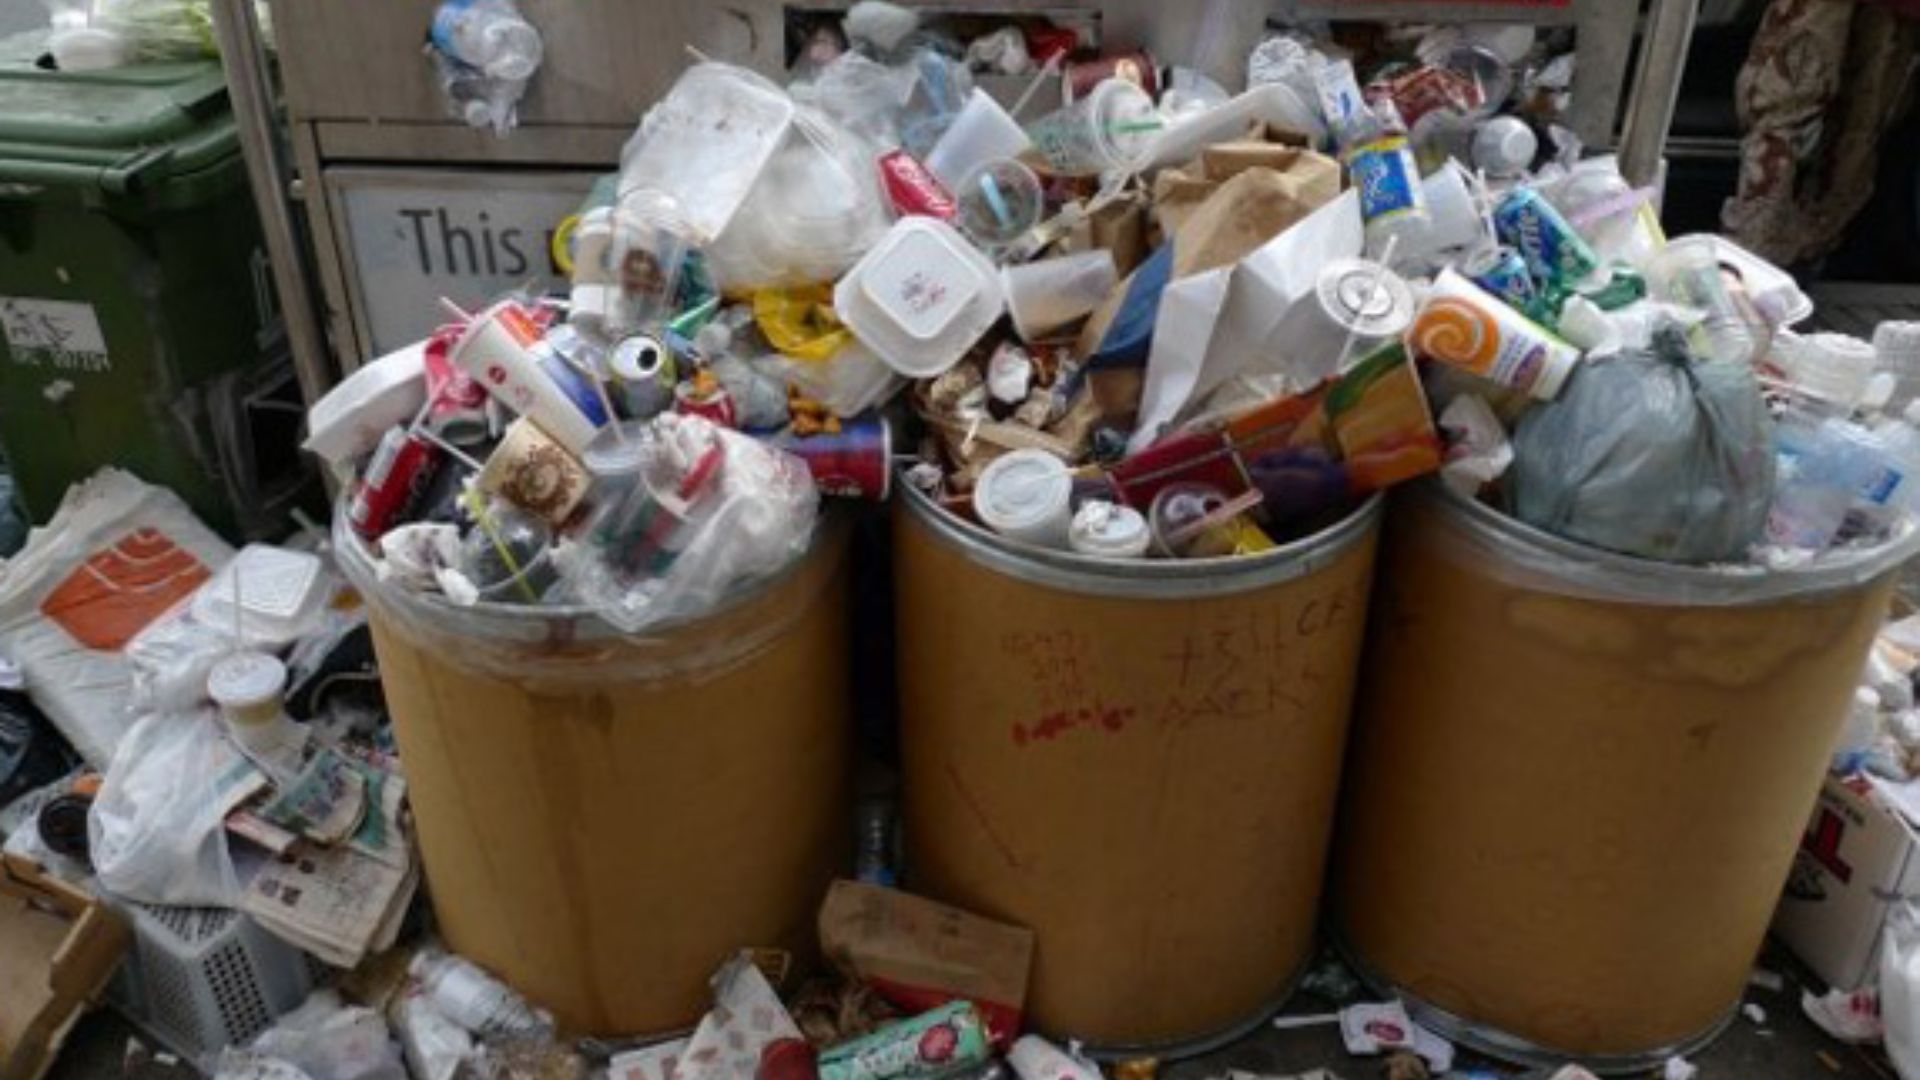 garbage in disposal bins